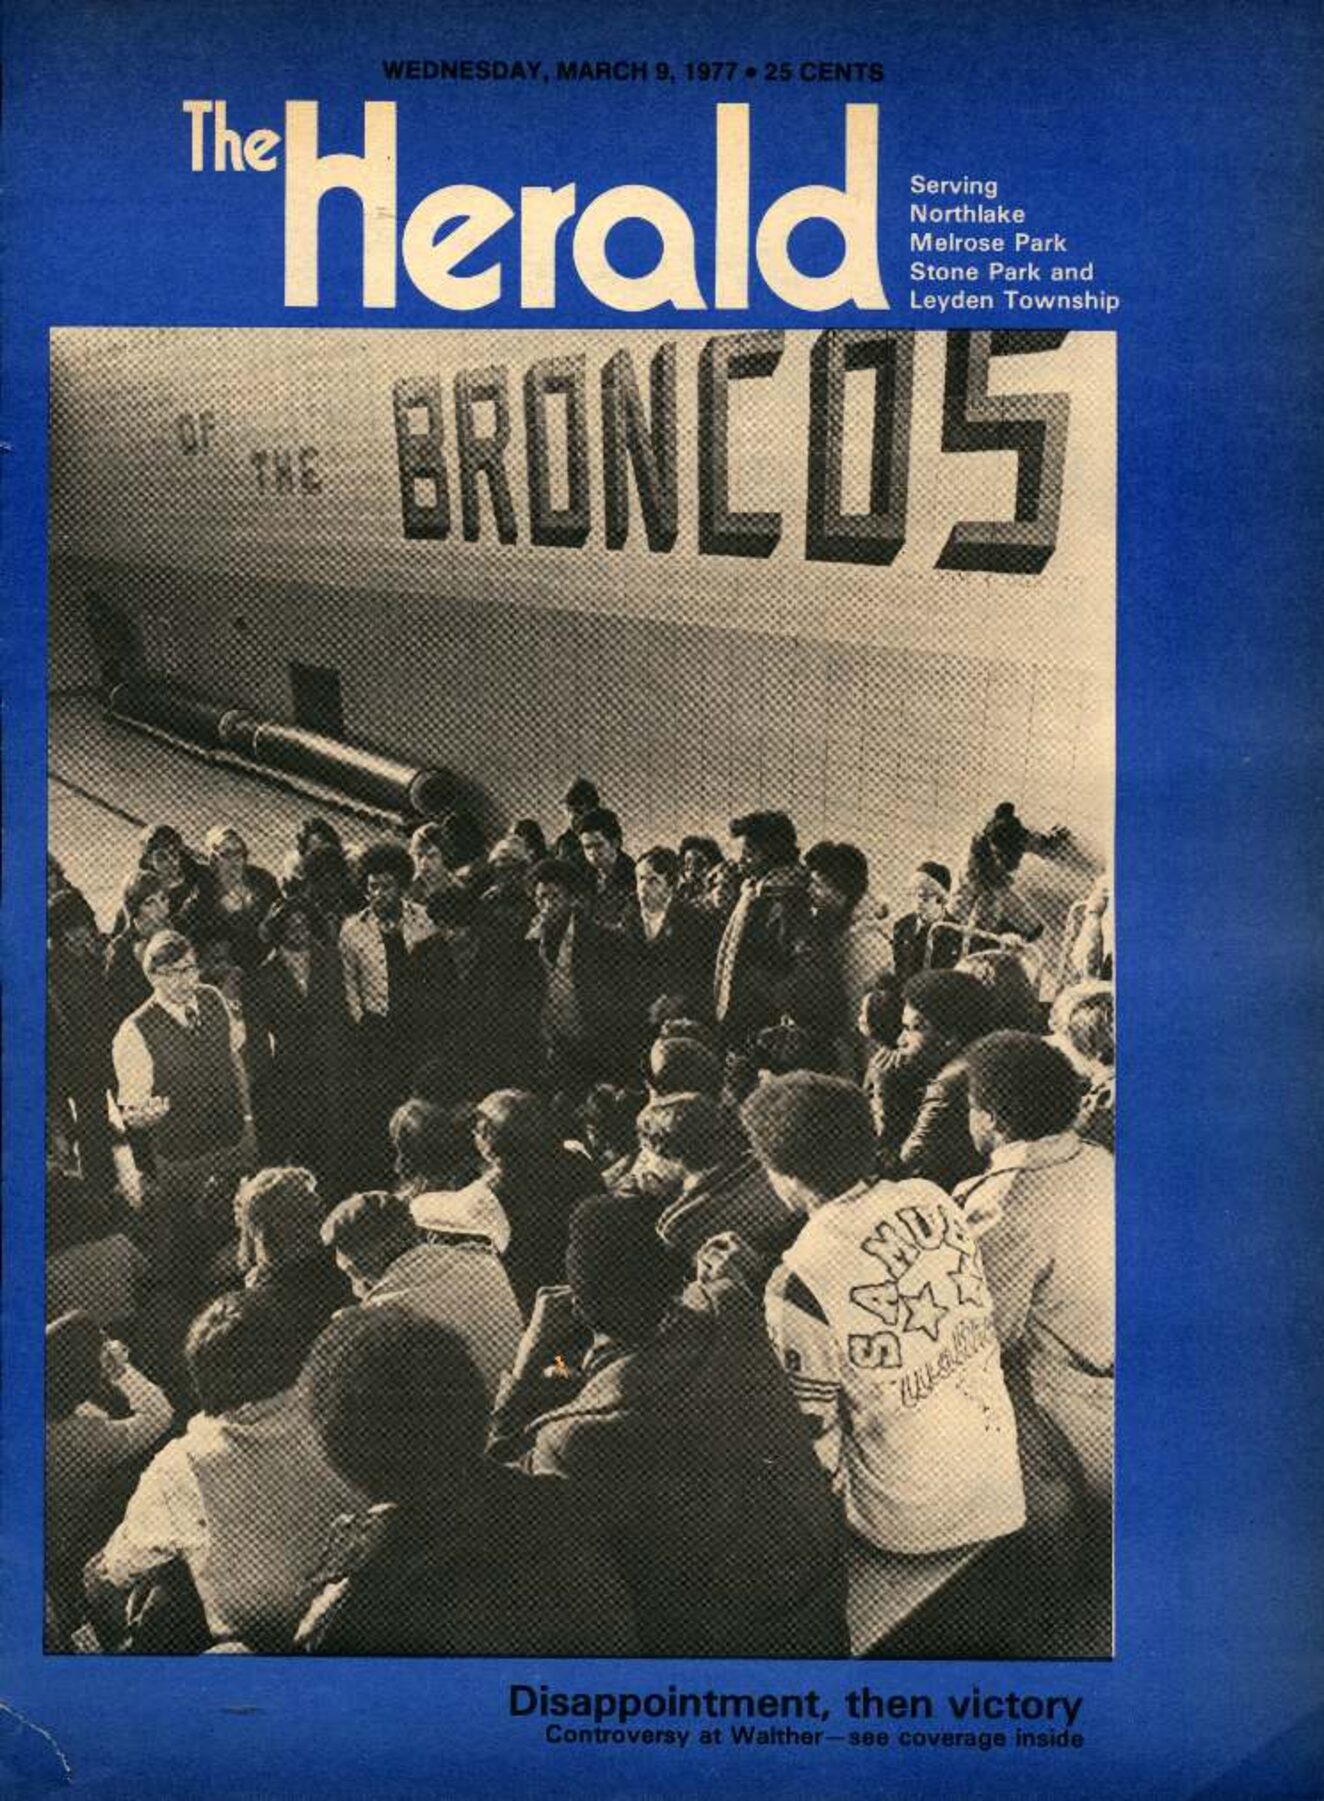 The Herald – 19770309